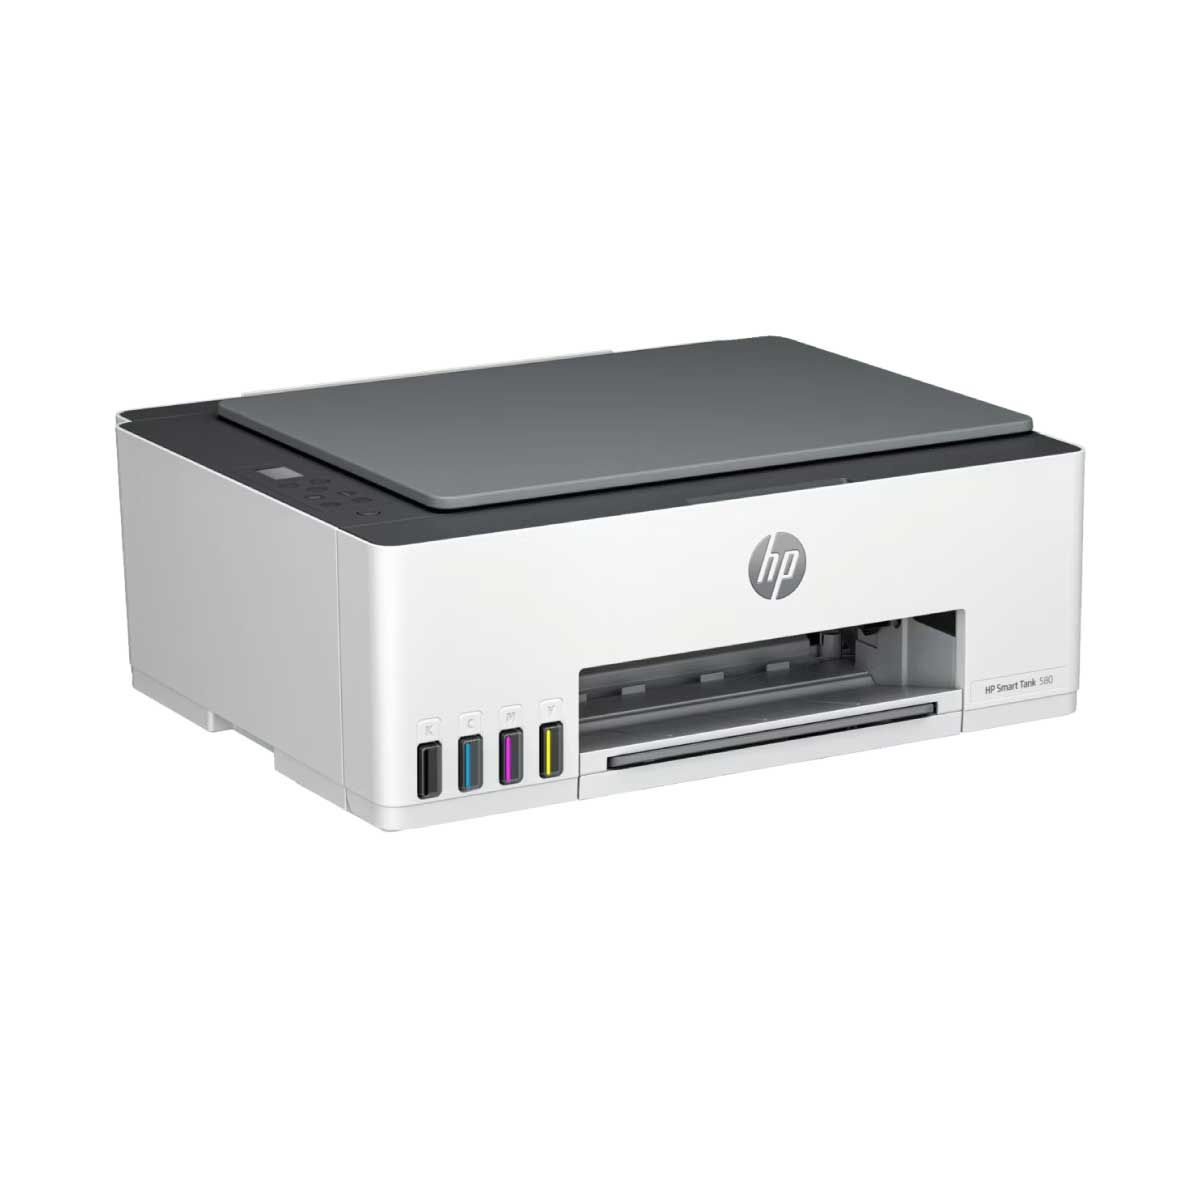 PRINTER (เครื่องพิมพ์ไร้สาย) HP SMART TANK 580 ALL-IN-ONE